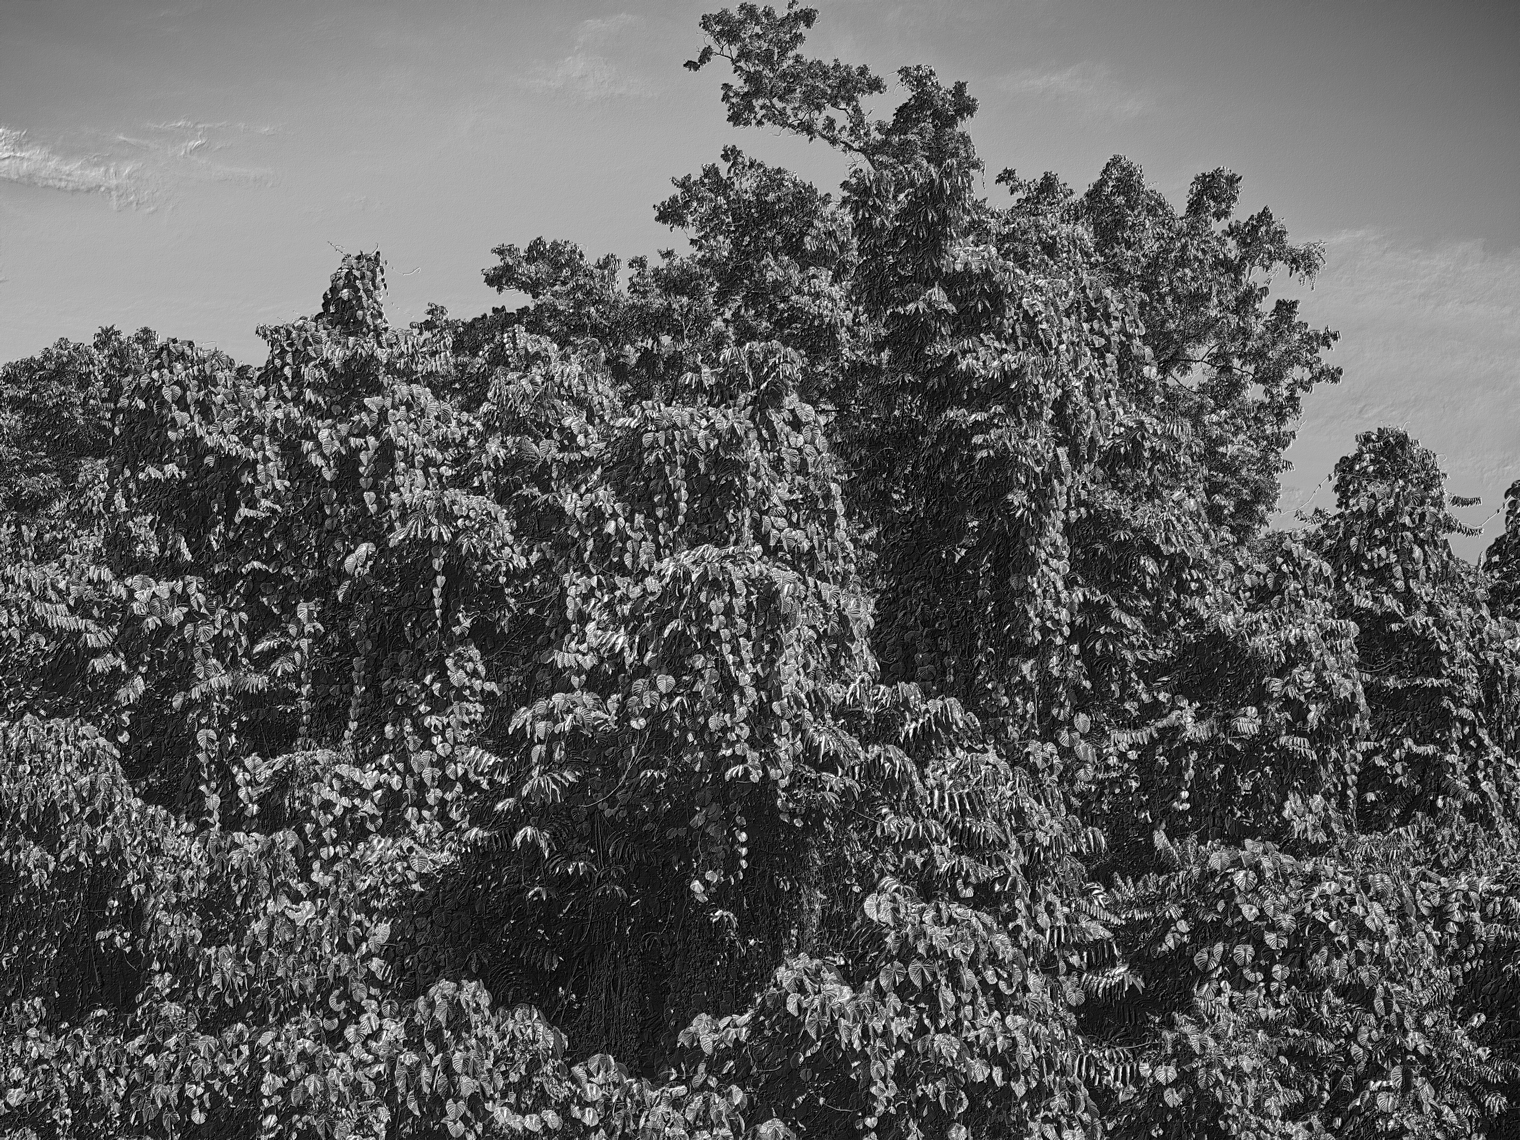 Jon Wyatt Photography - Fault Line XII - A tsunami of vegetation - invasive vines in samoa